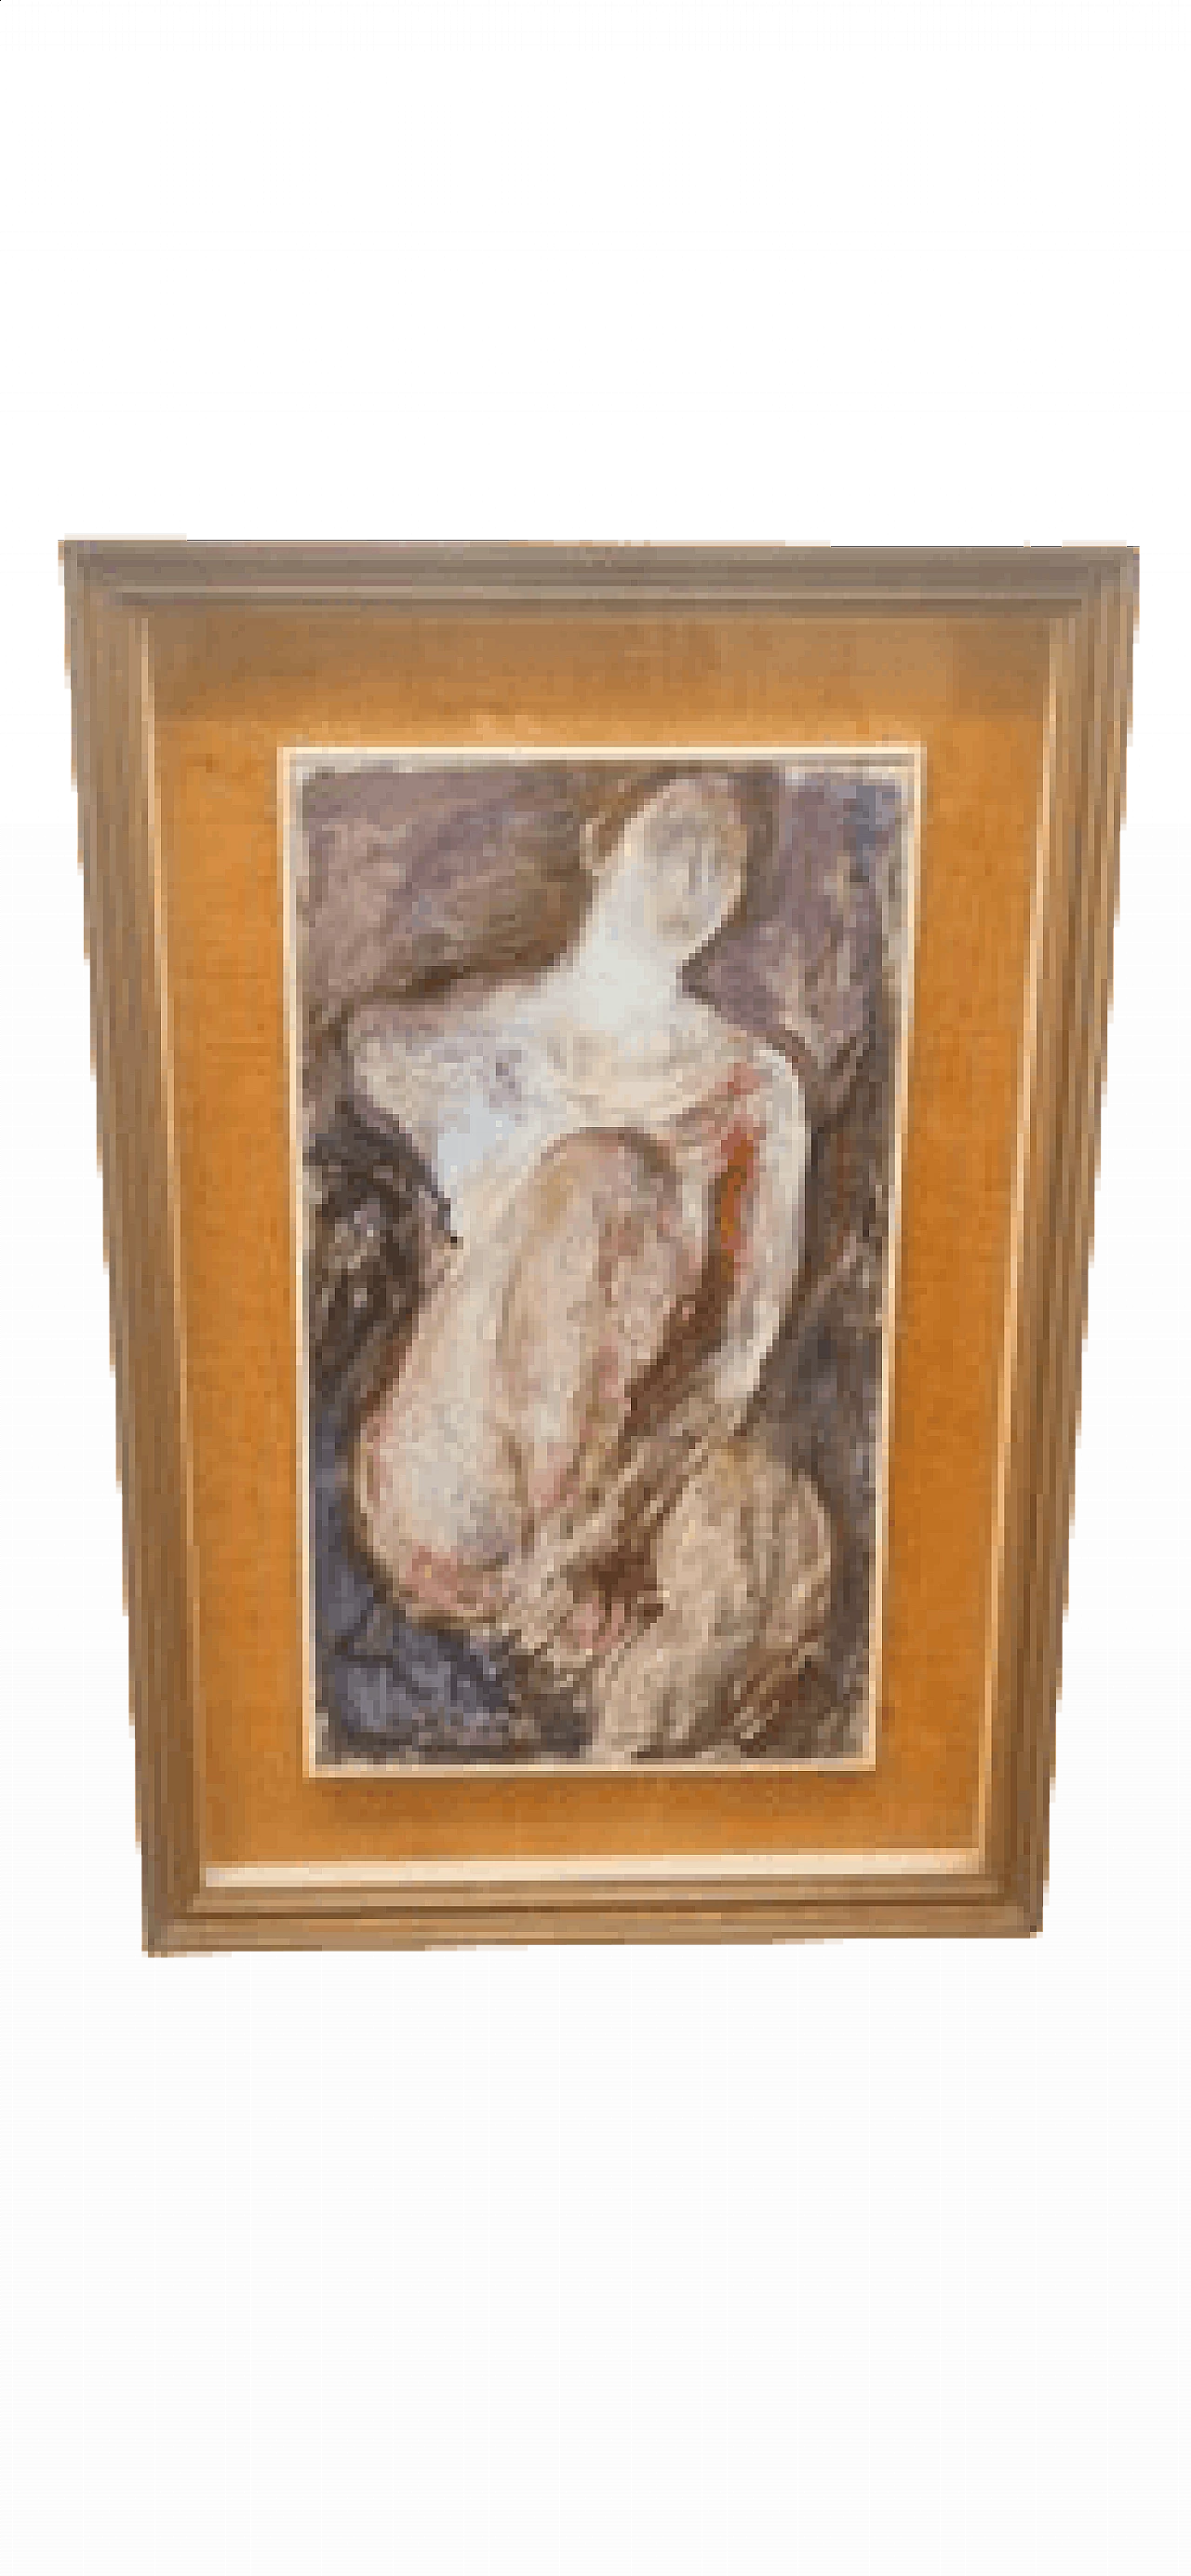 Capaldo, female nude, oil painting on canvas, 1970s 7